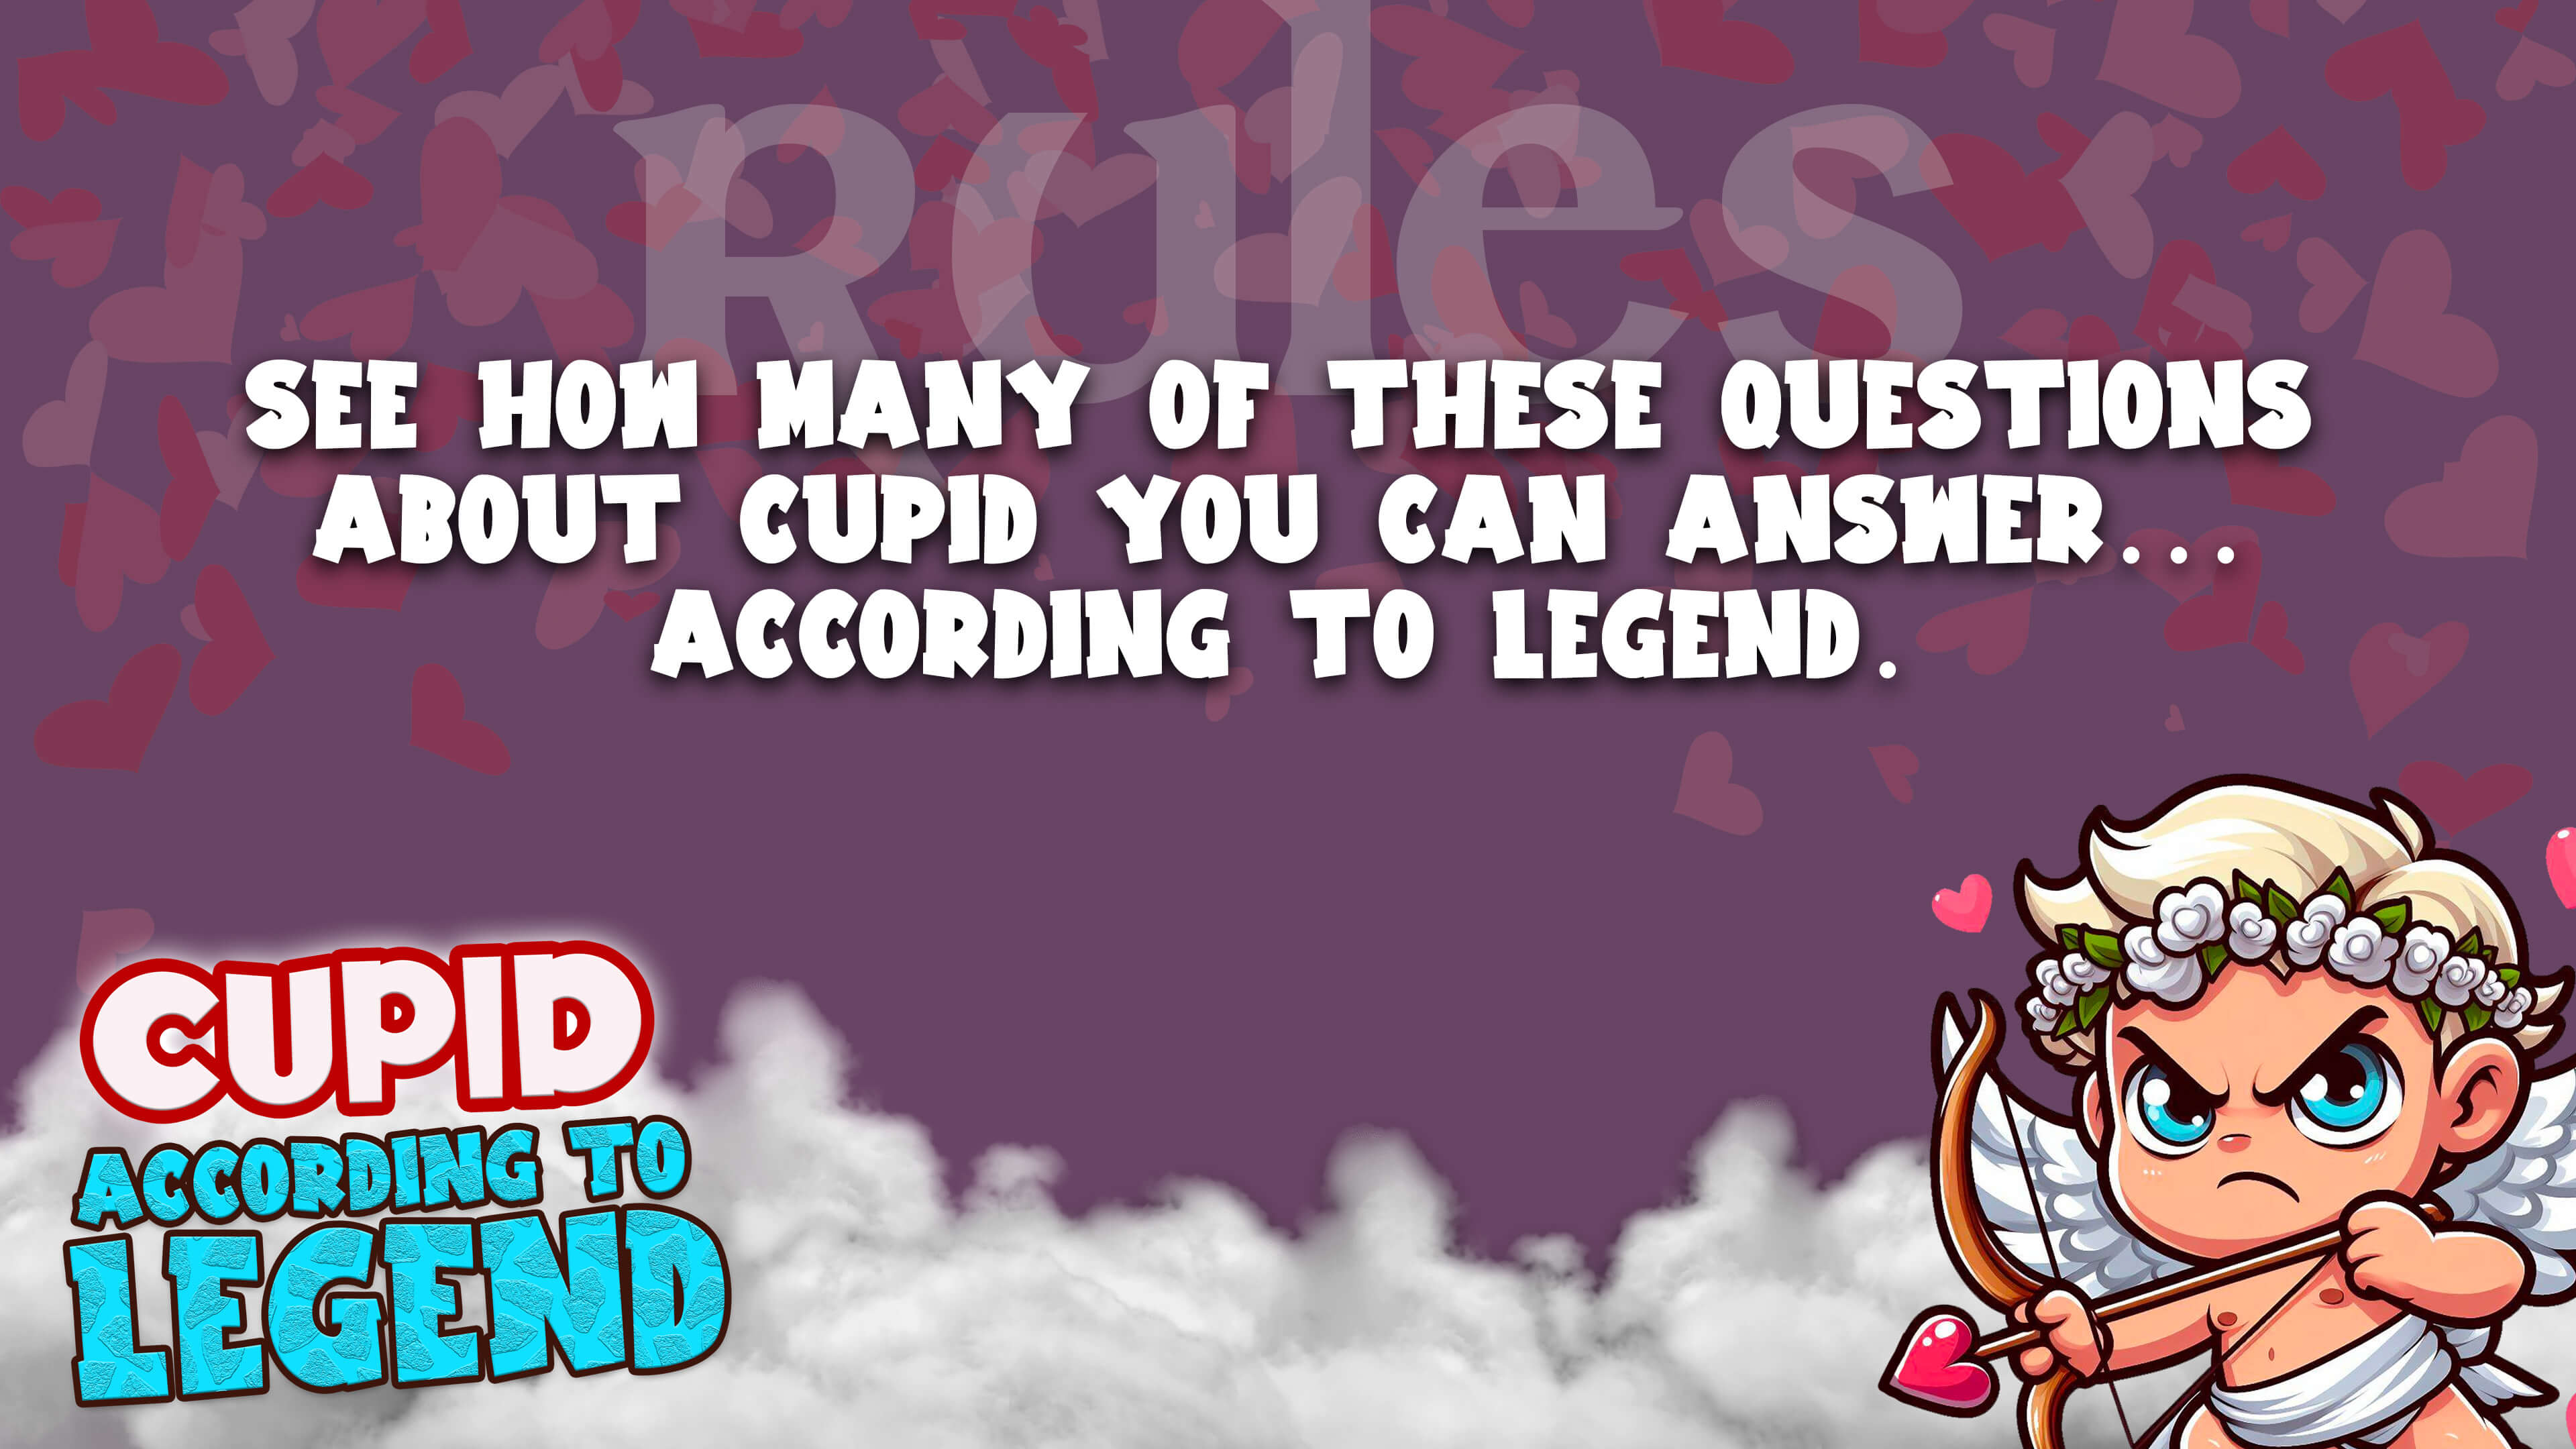 Cupid: According To Legend